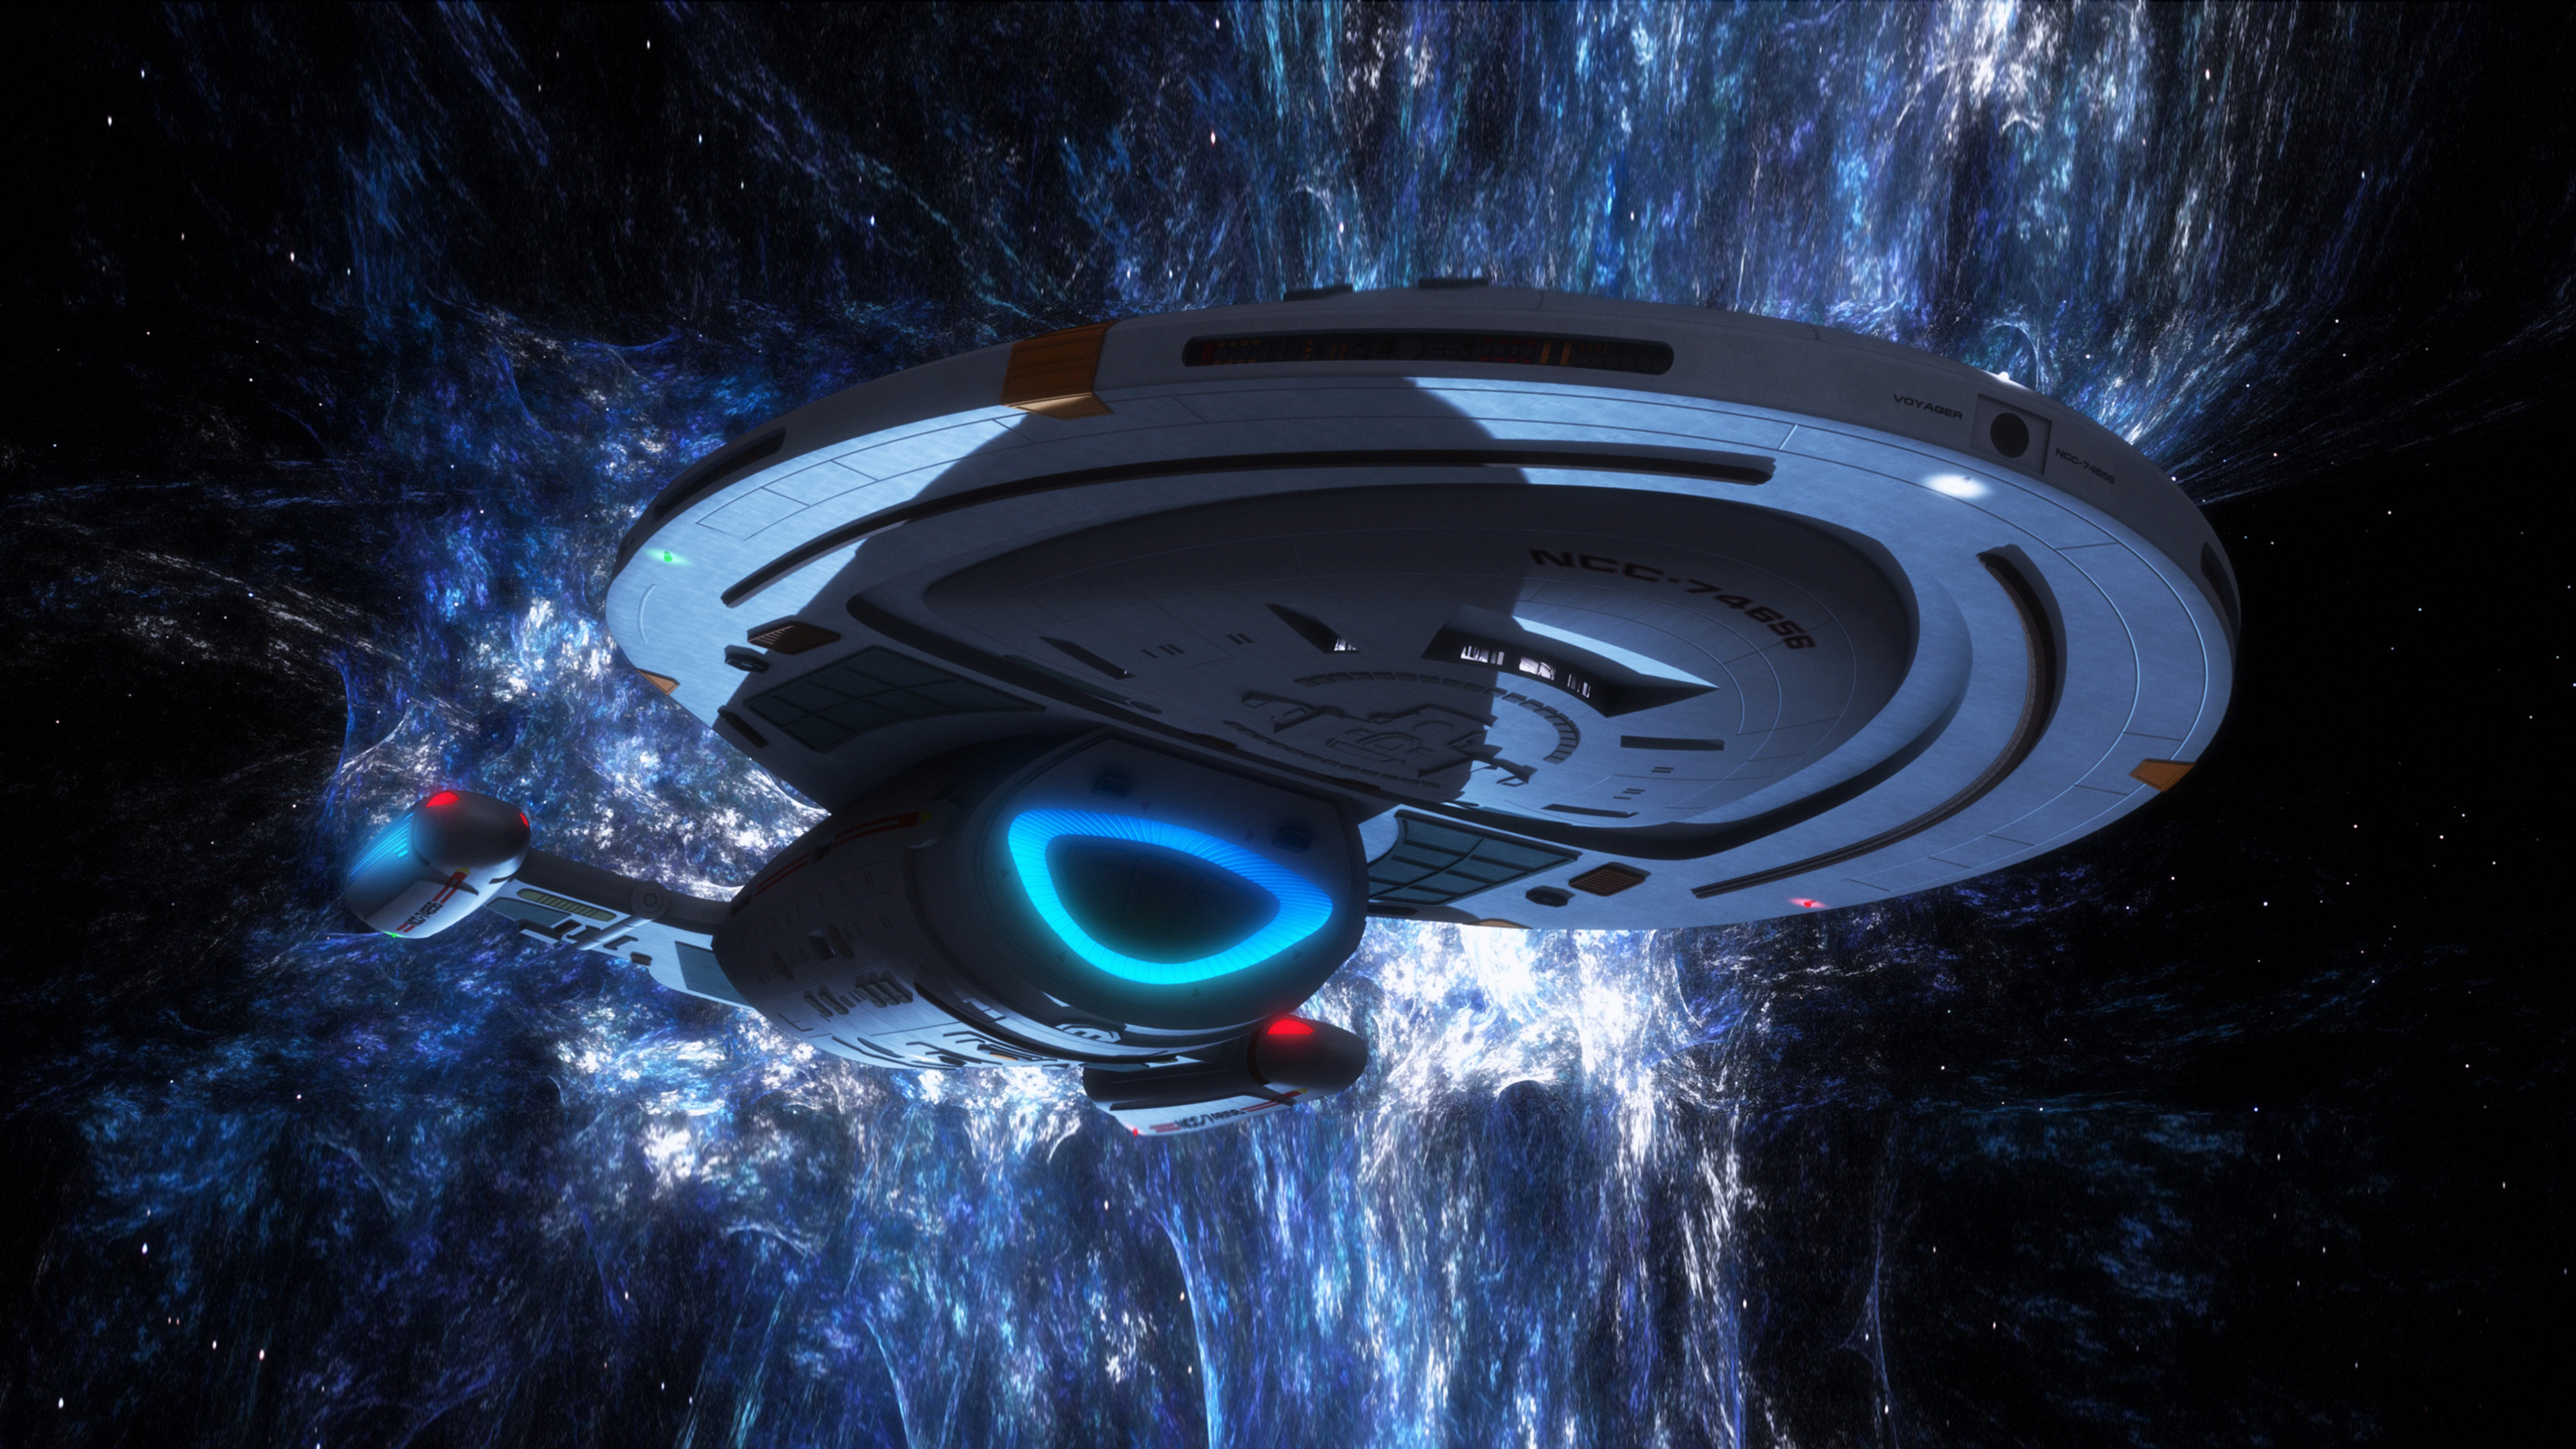 Star Trek Voyager Spaceship Digital Art Hd Wallpapers For Mobile Phones